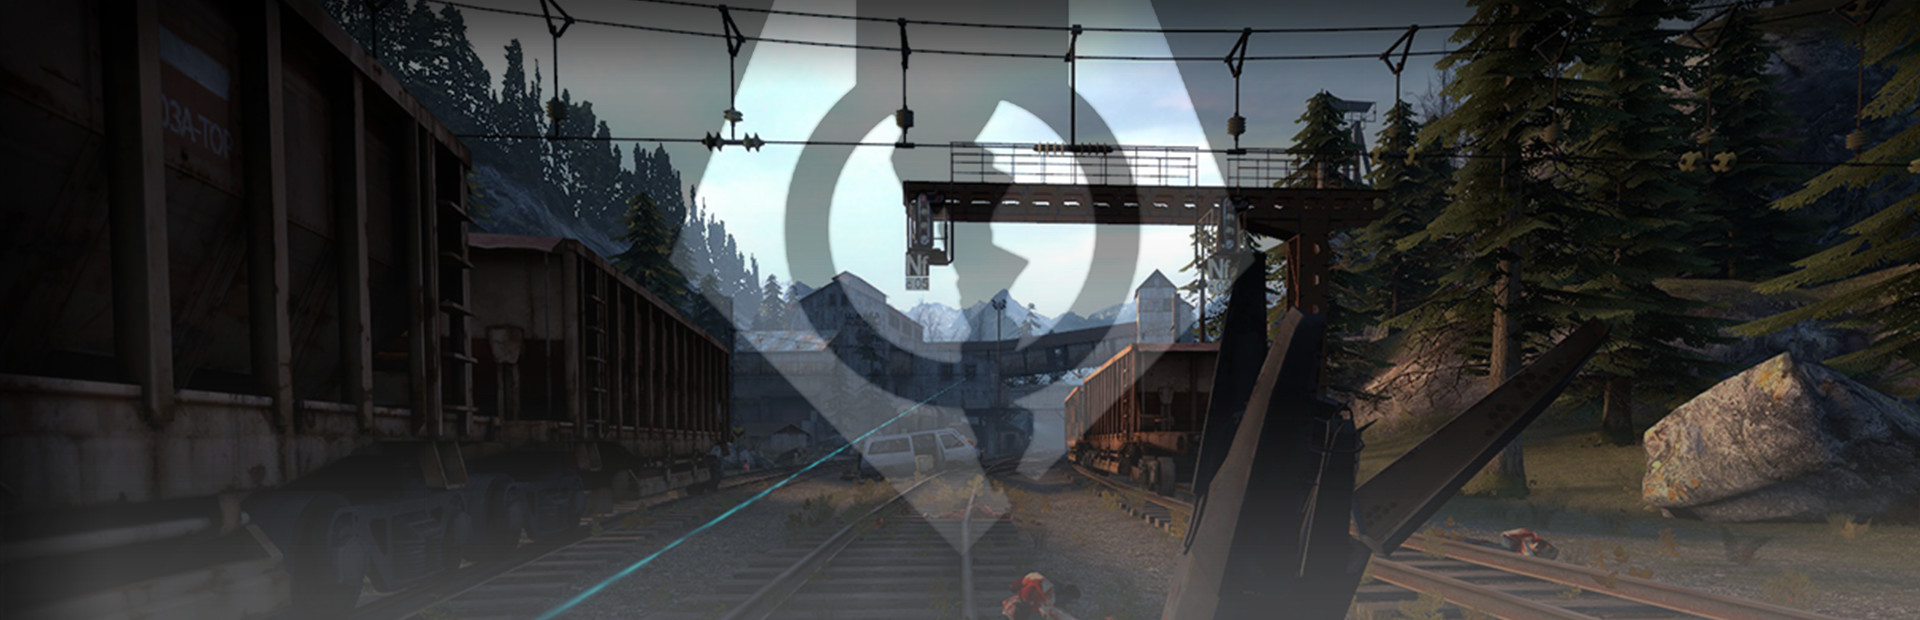 Half-Life 2: DownFall cover image